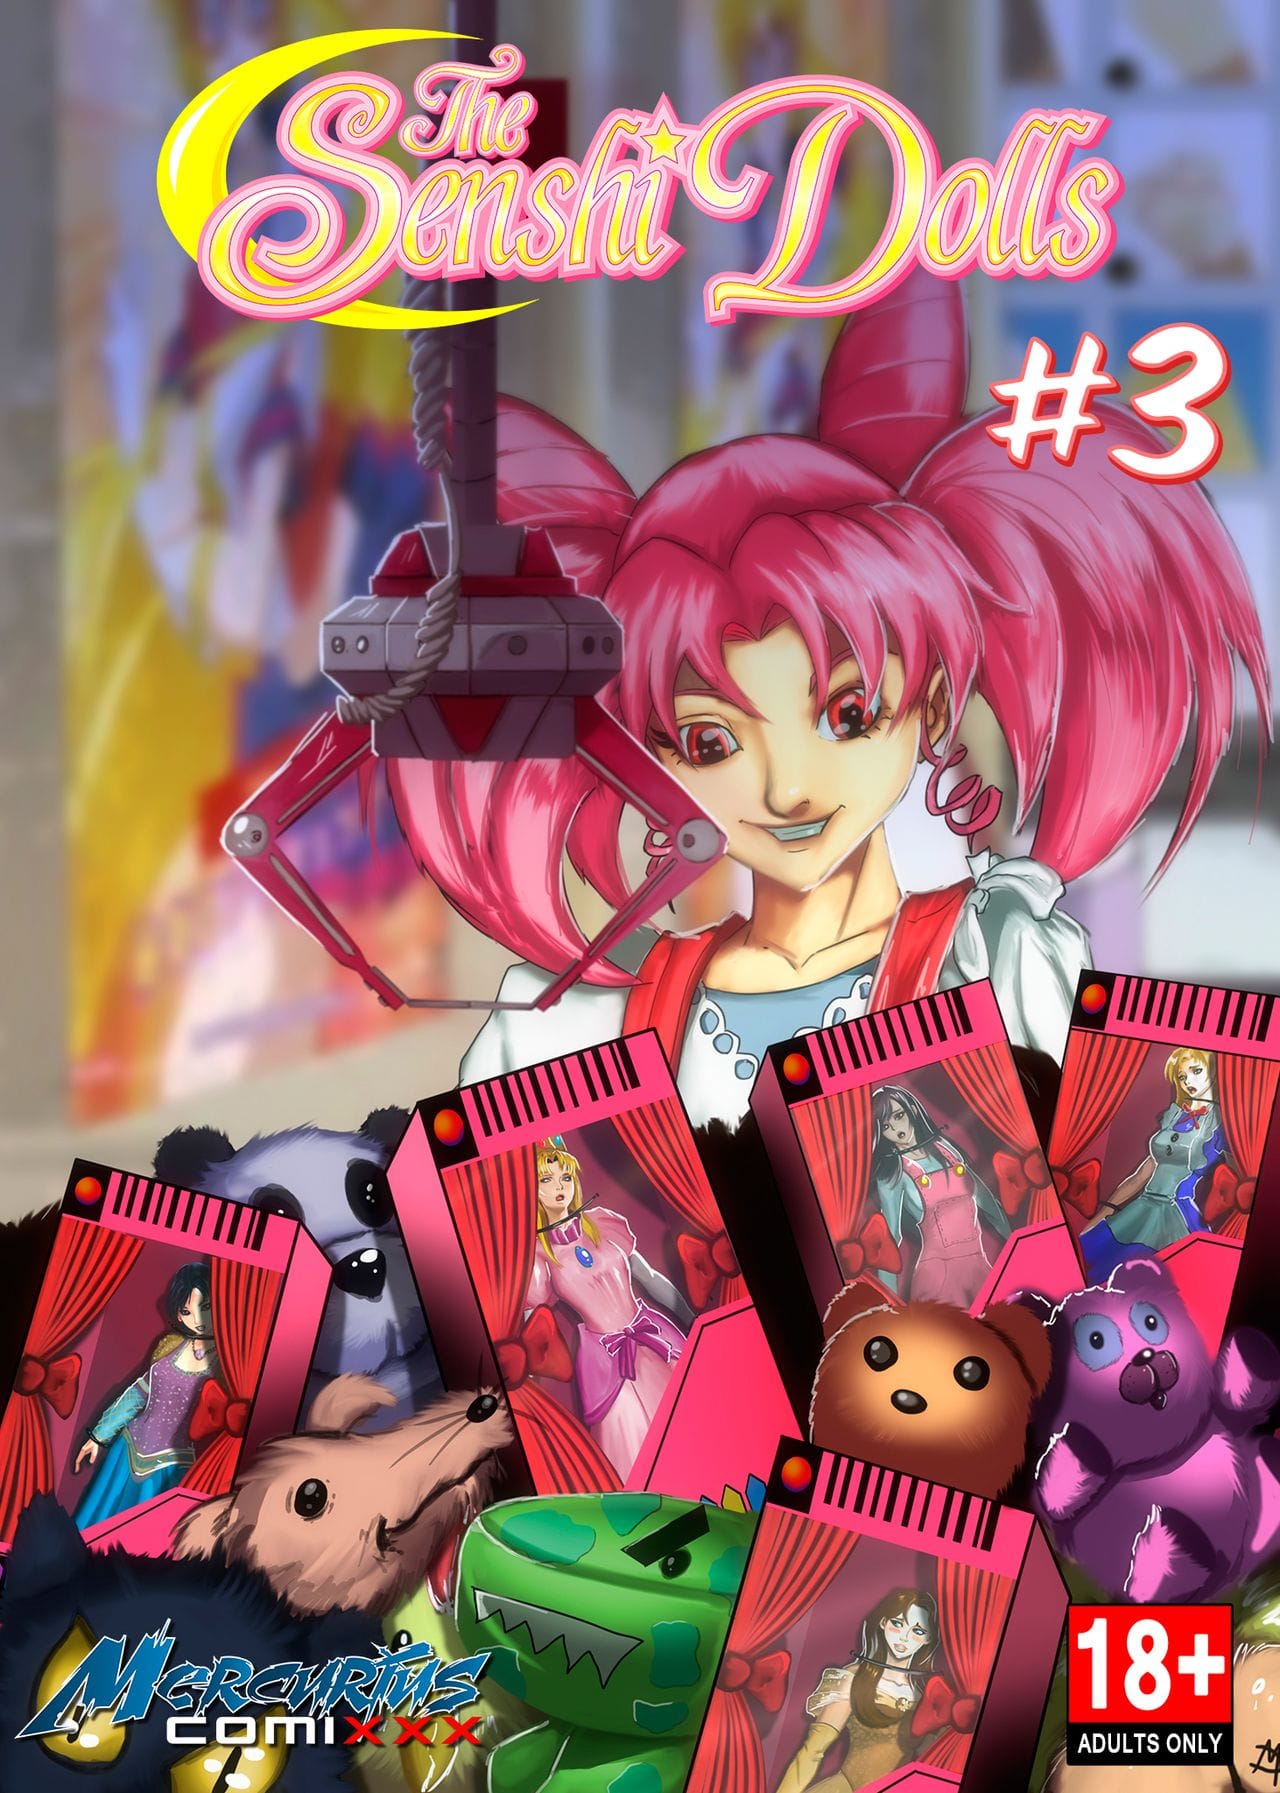 The Senshi Dolls #3 – Mistaken